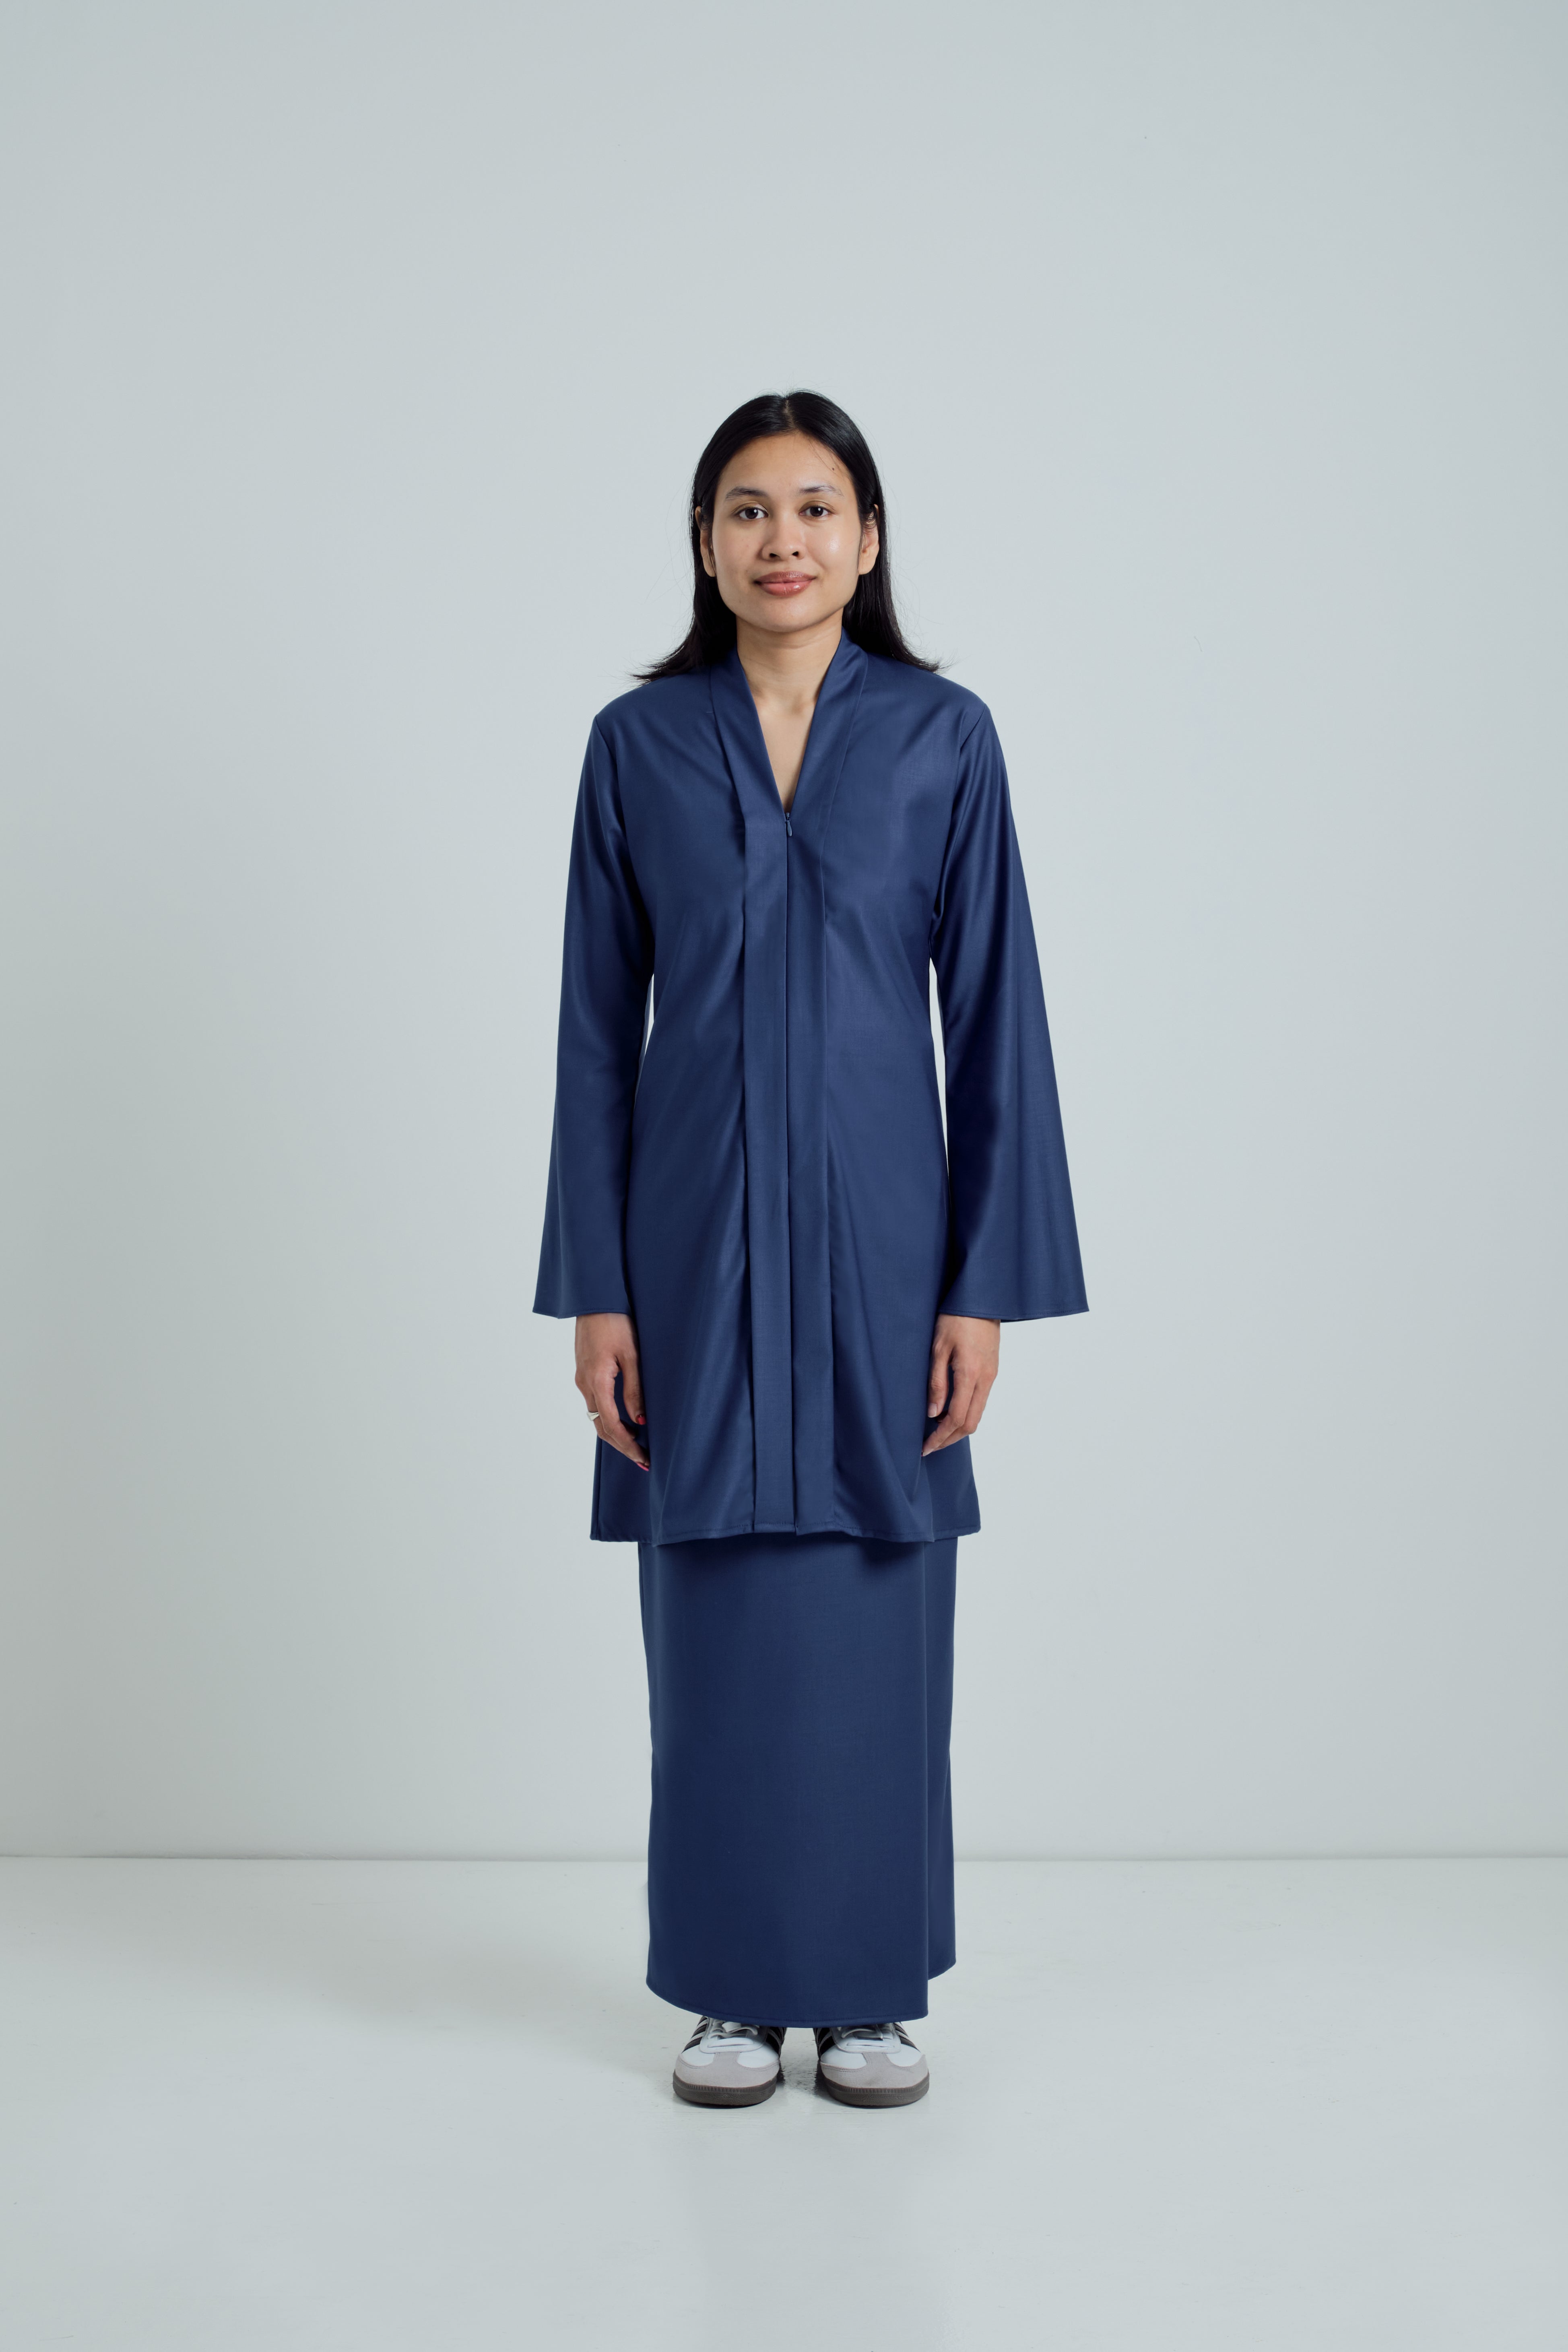 Patawali Baju Kebaya - True Blue